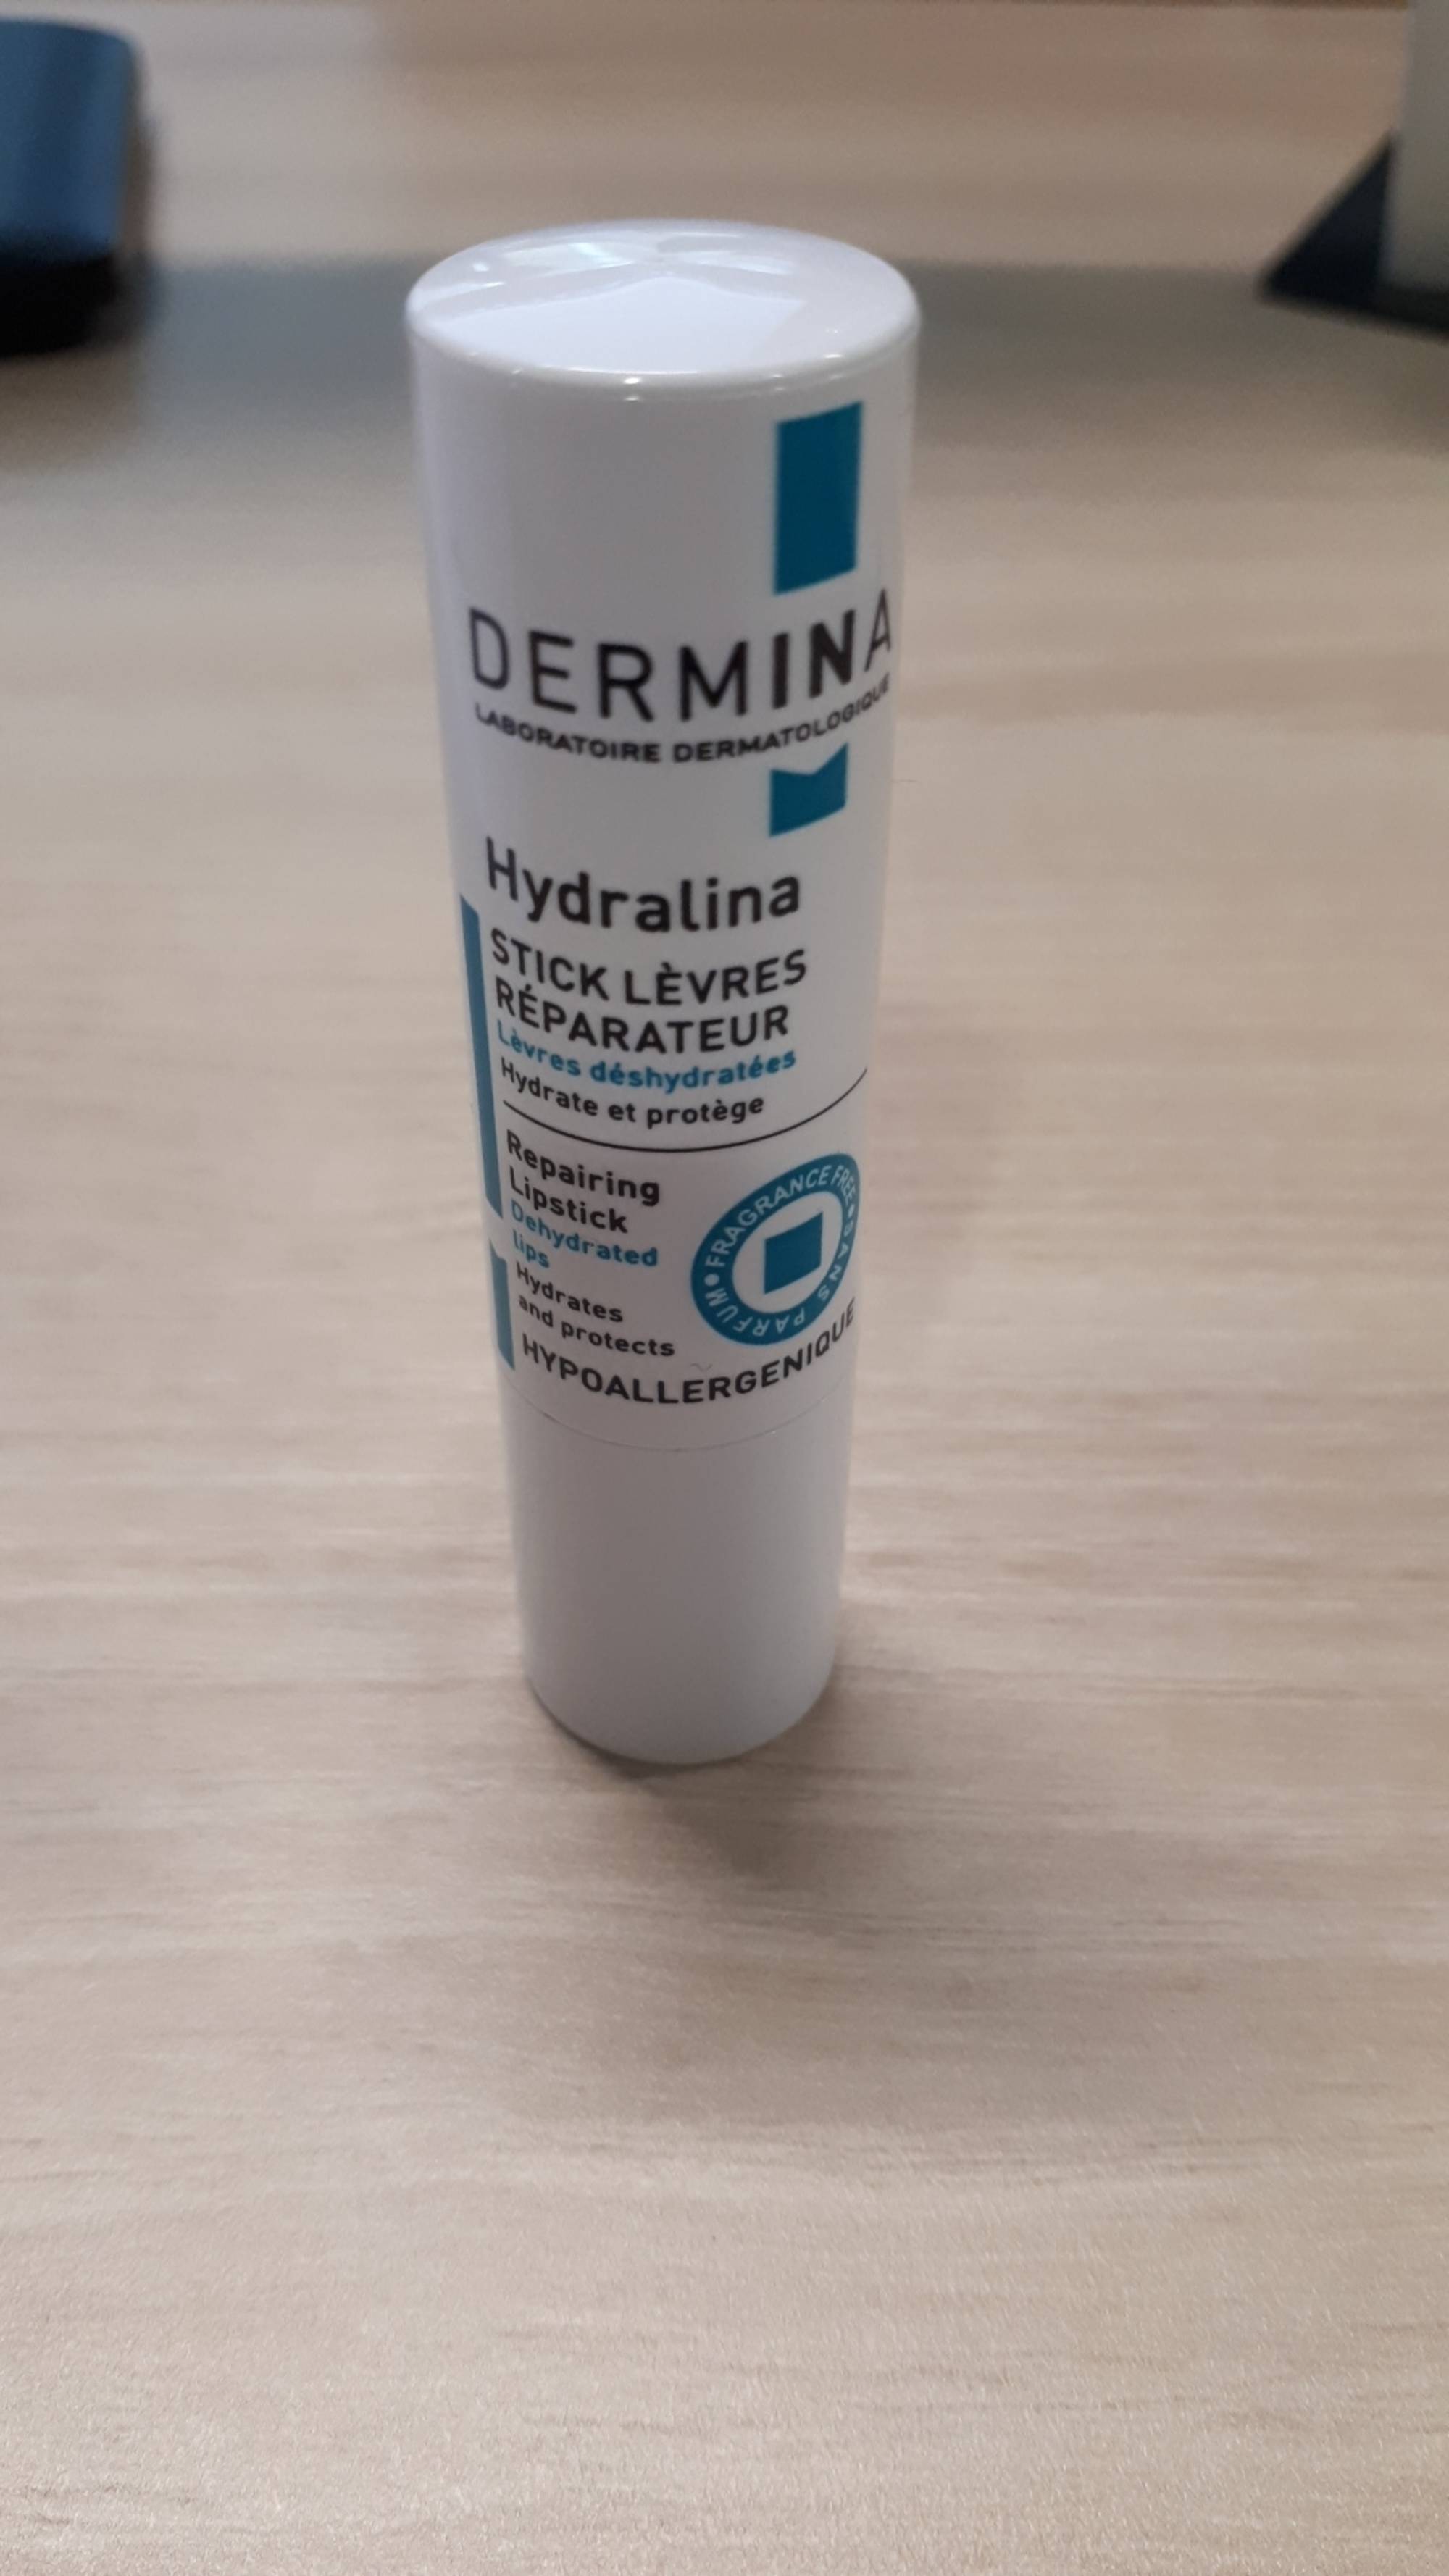 DERMINA - Hydralina - Stick lèvres réparateur